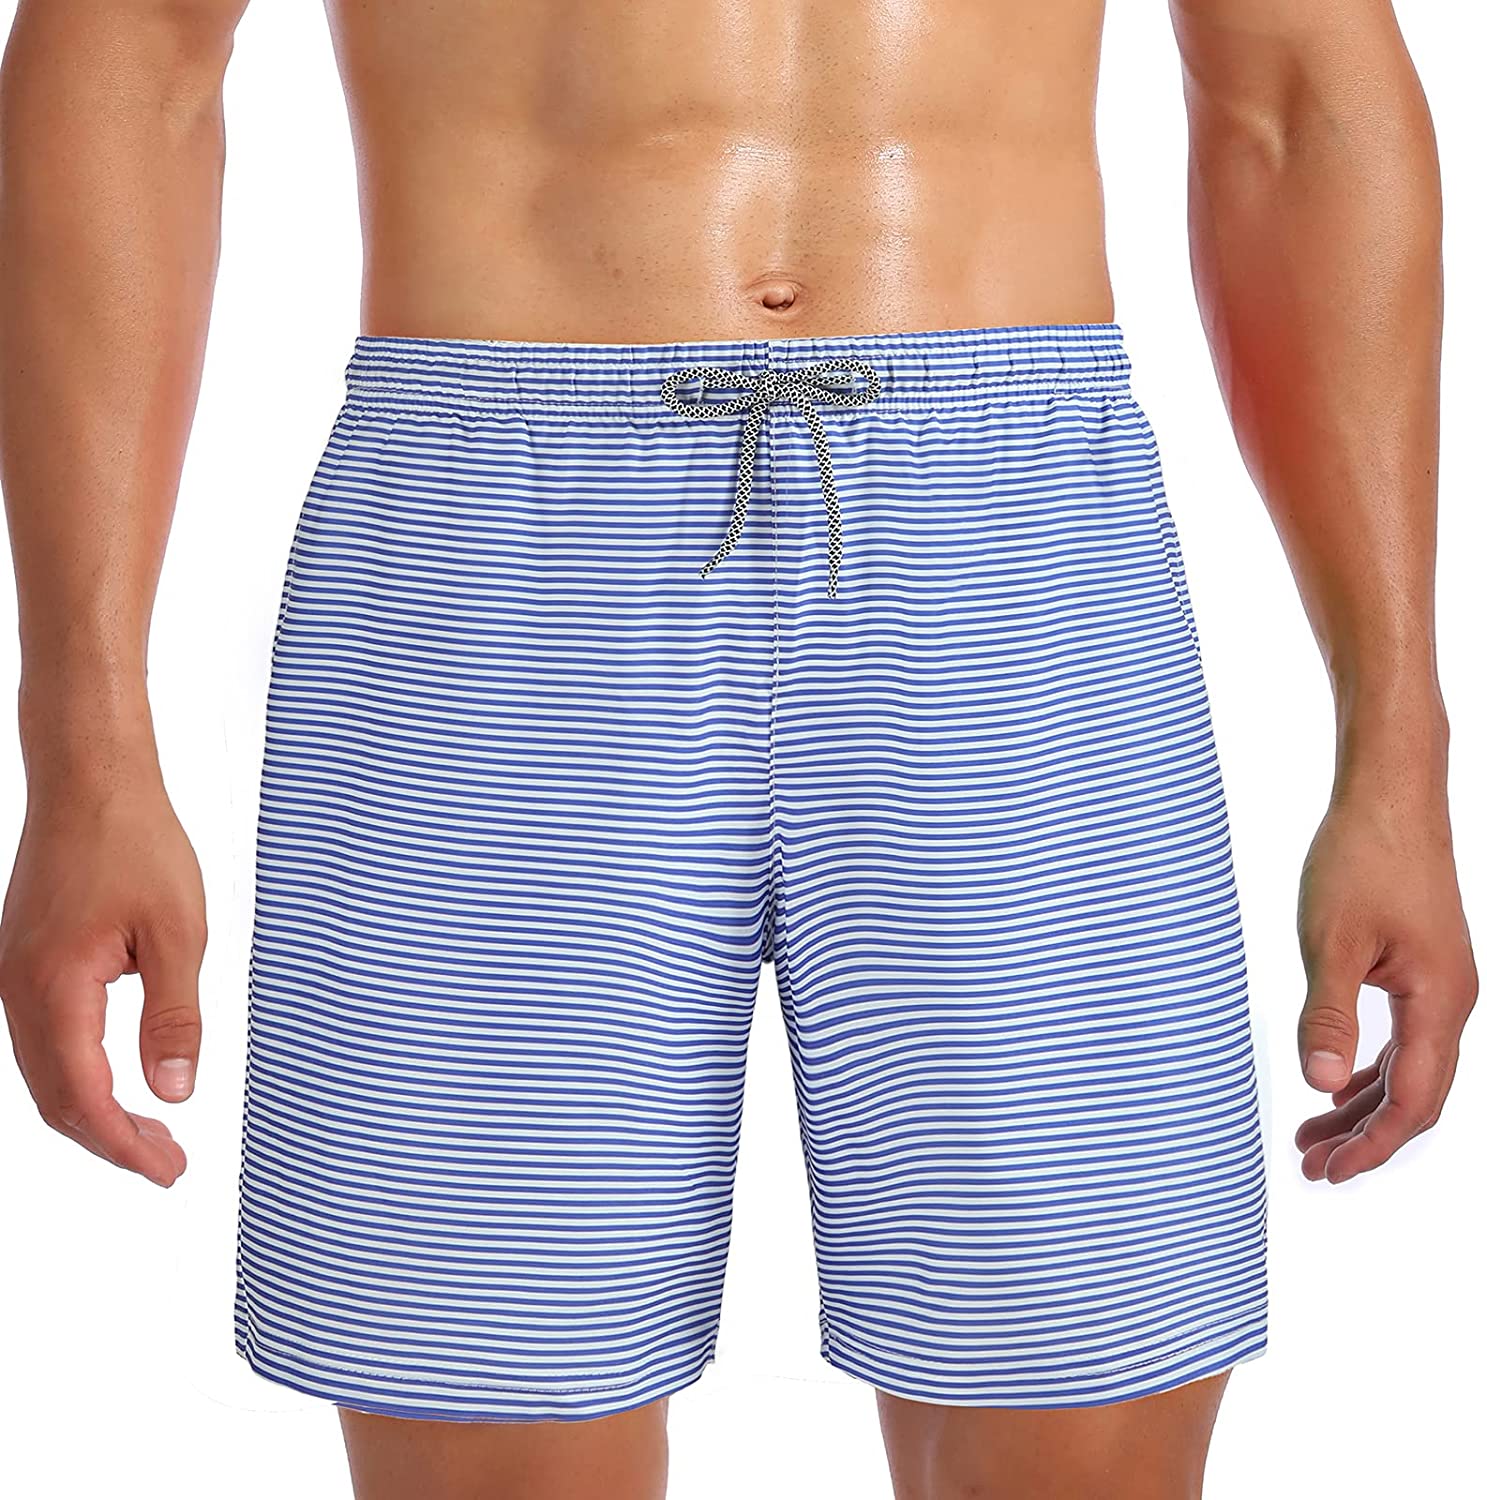 Inadays Men's Swim Trunks with Mesh Lining Quick Dry Sports Shorts Beach Shorts  Boardshorts Bathing Suit Swimwear, M 